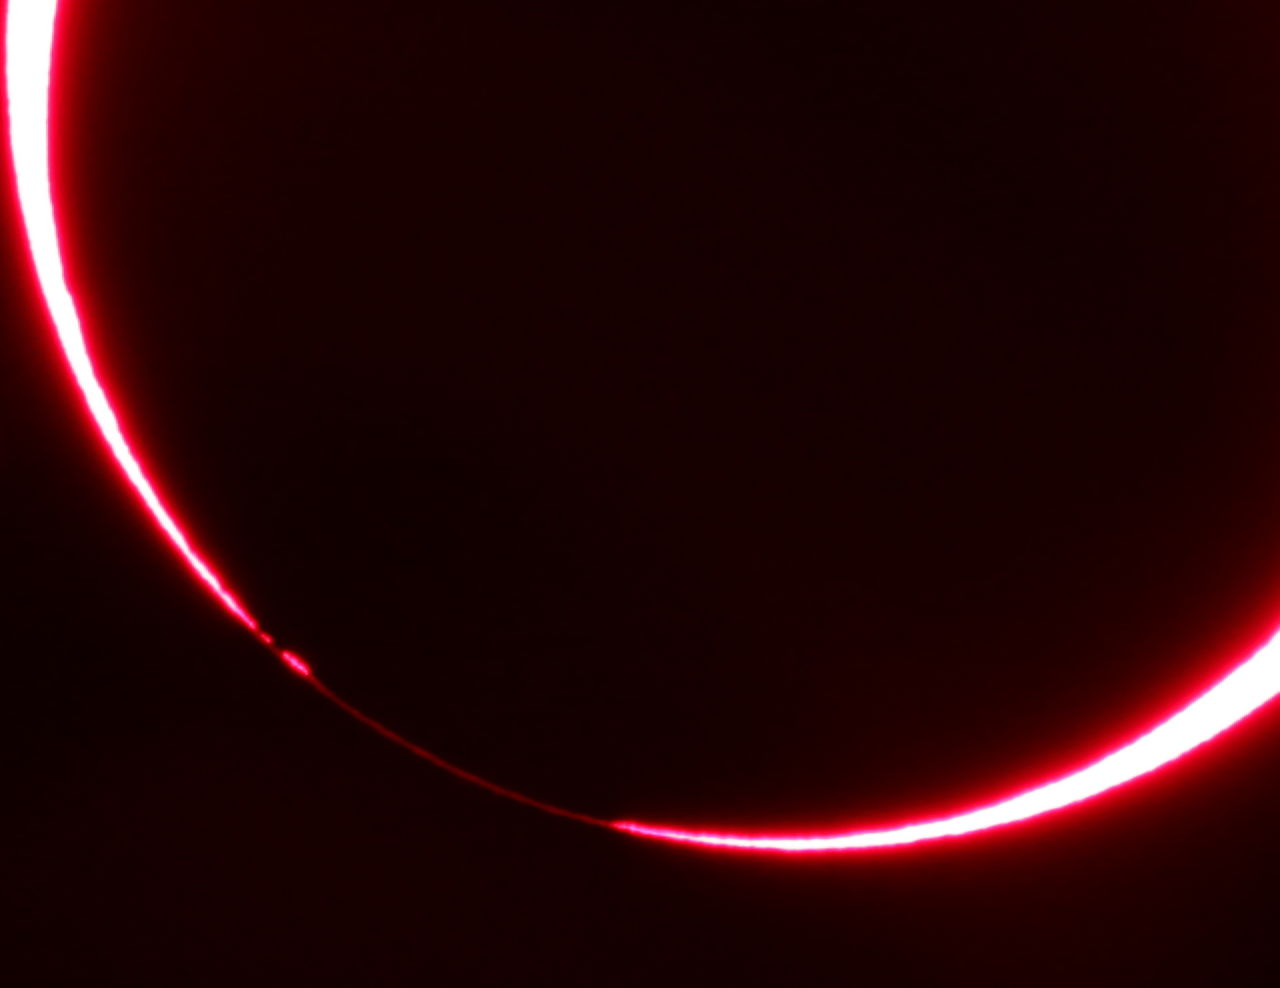 http://spaceweather.com/eclipses/15jan10b/Albert-Kong1.jpg